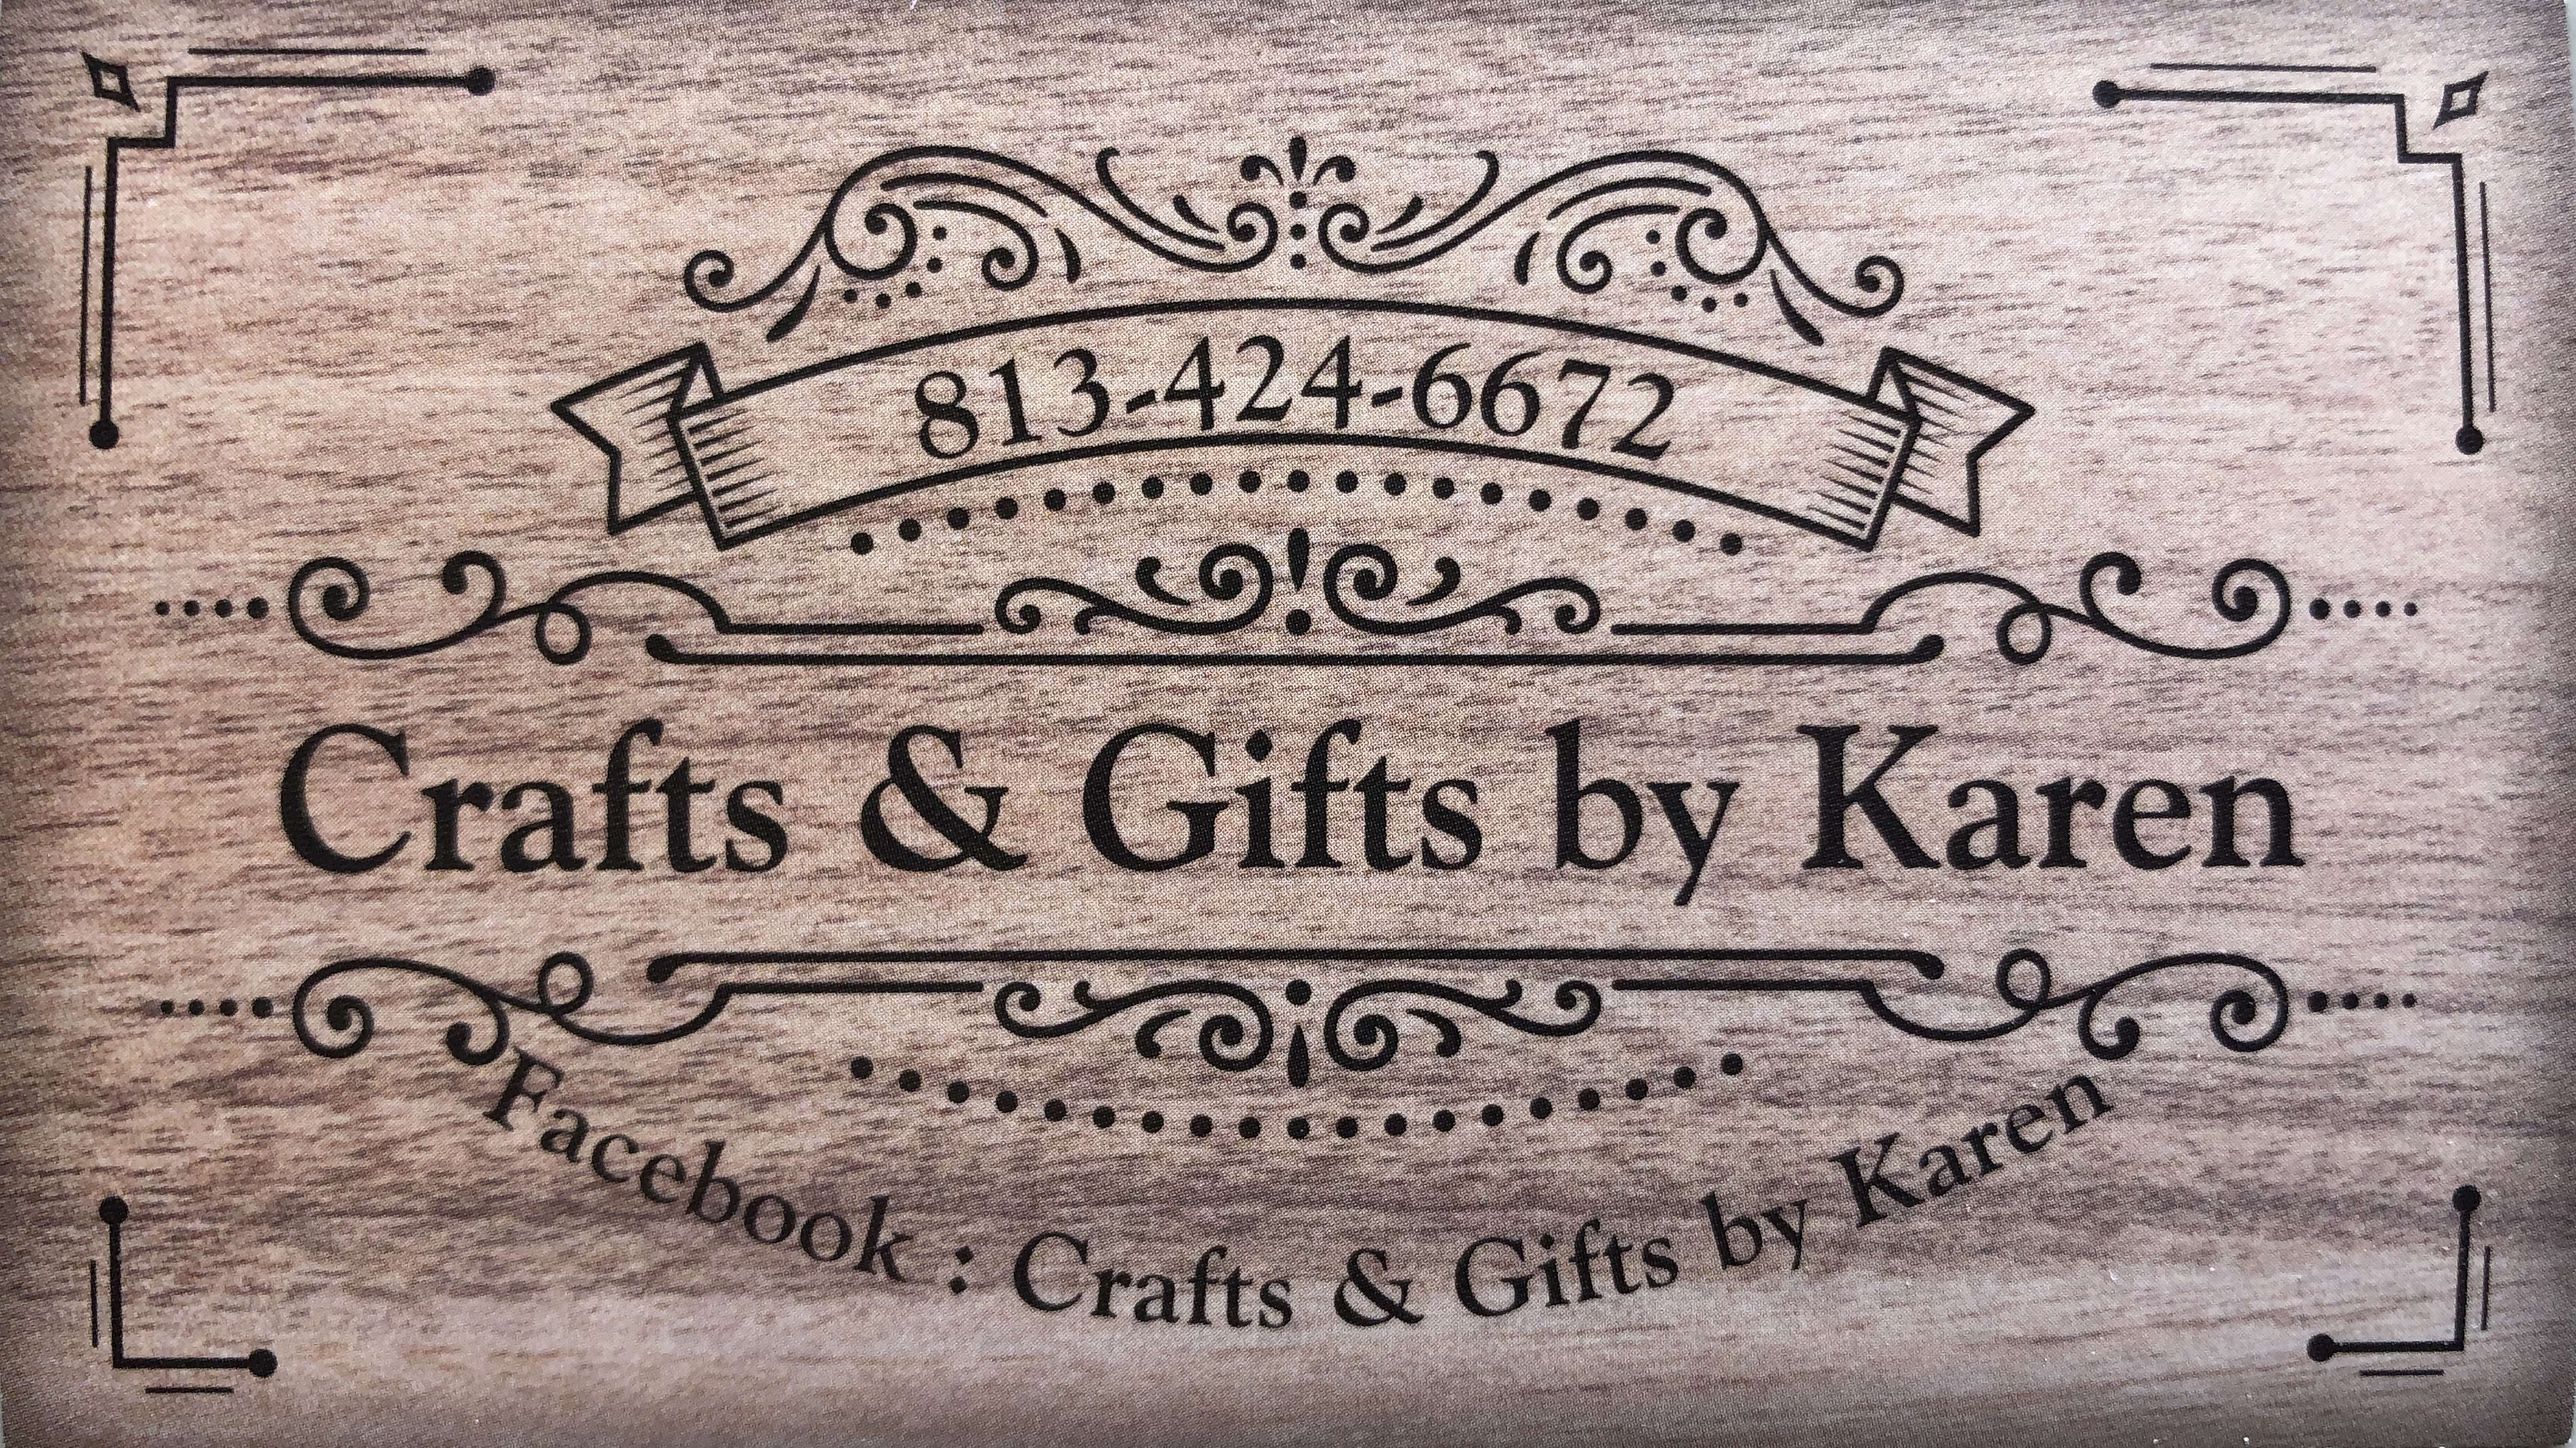 Crafts & Gifts By Karen